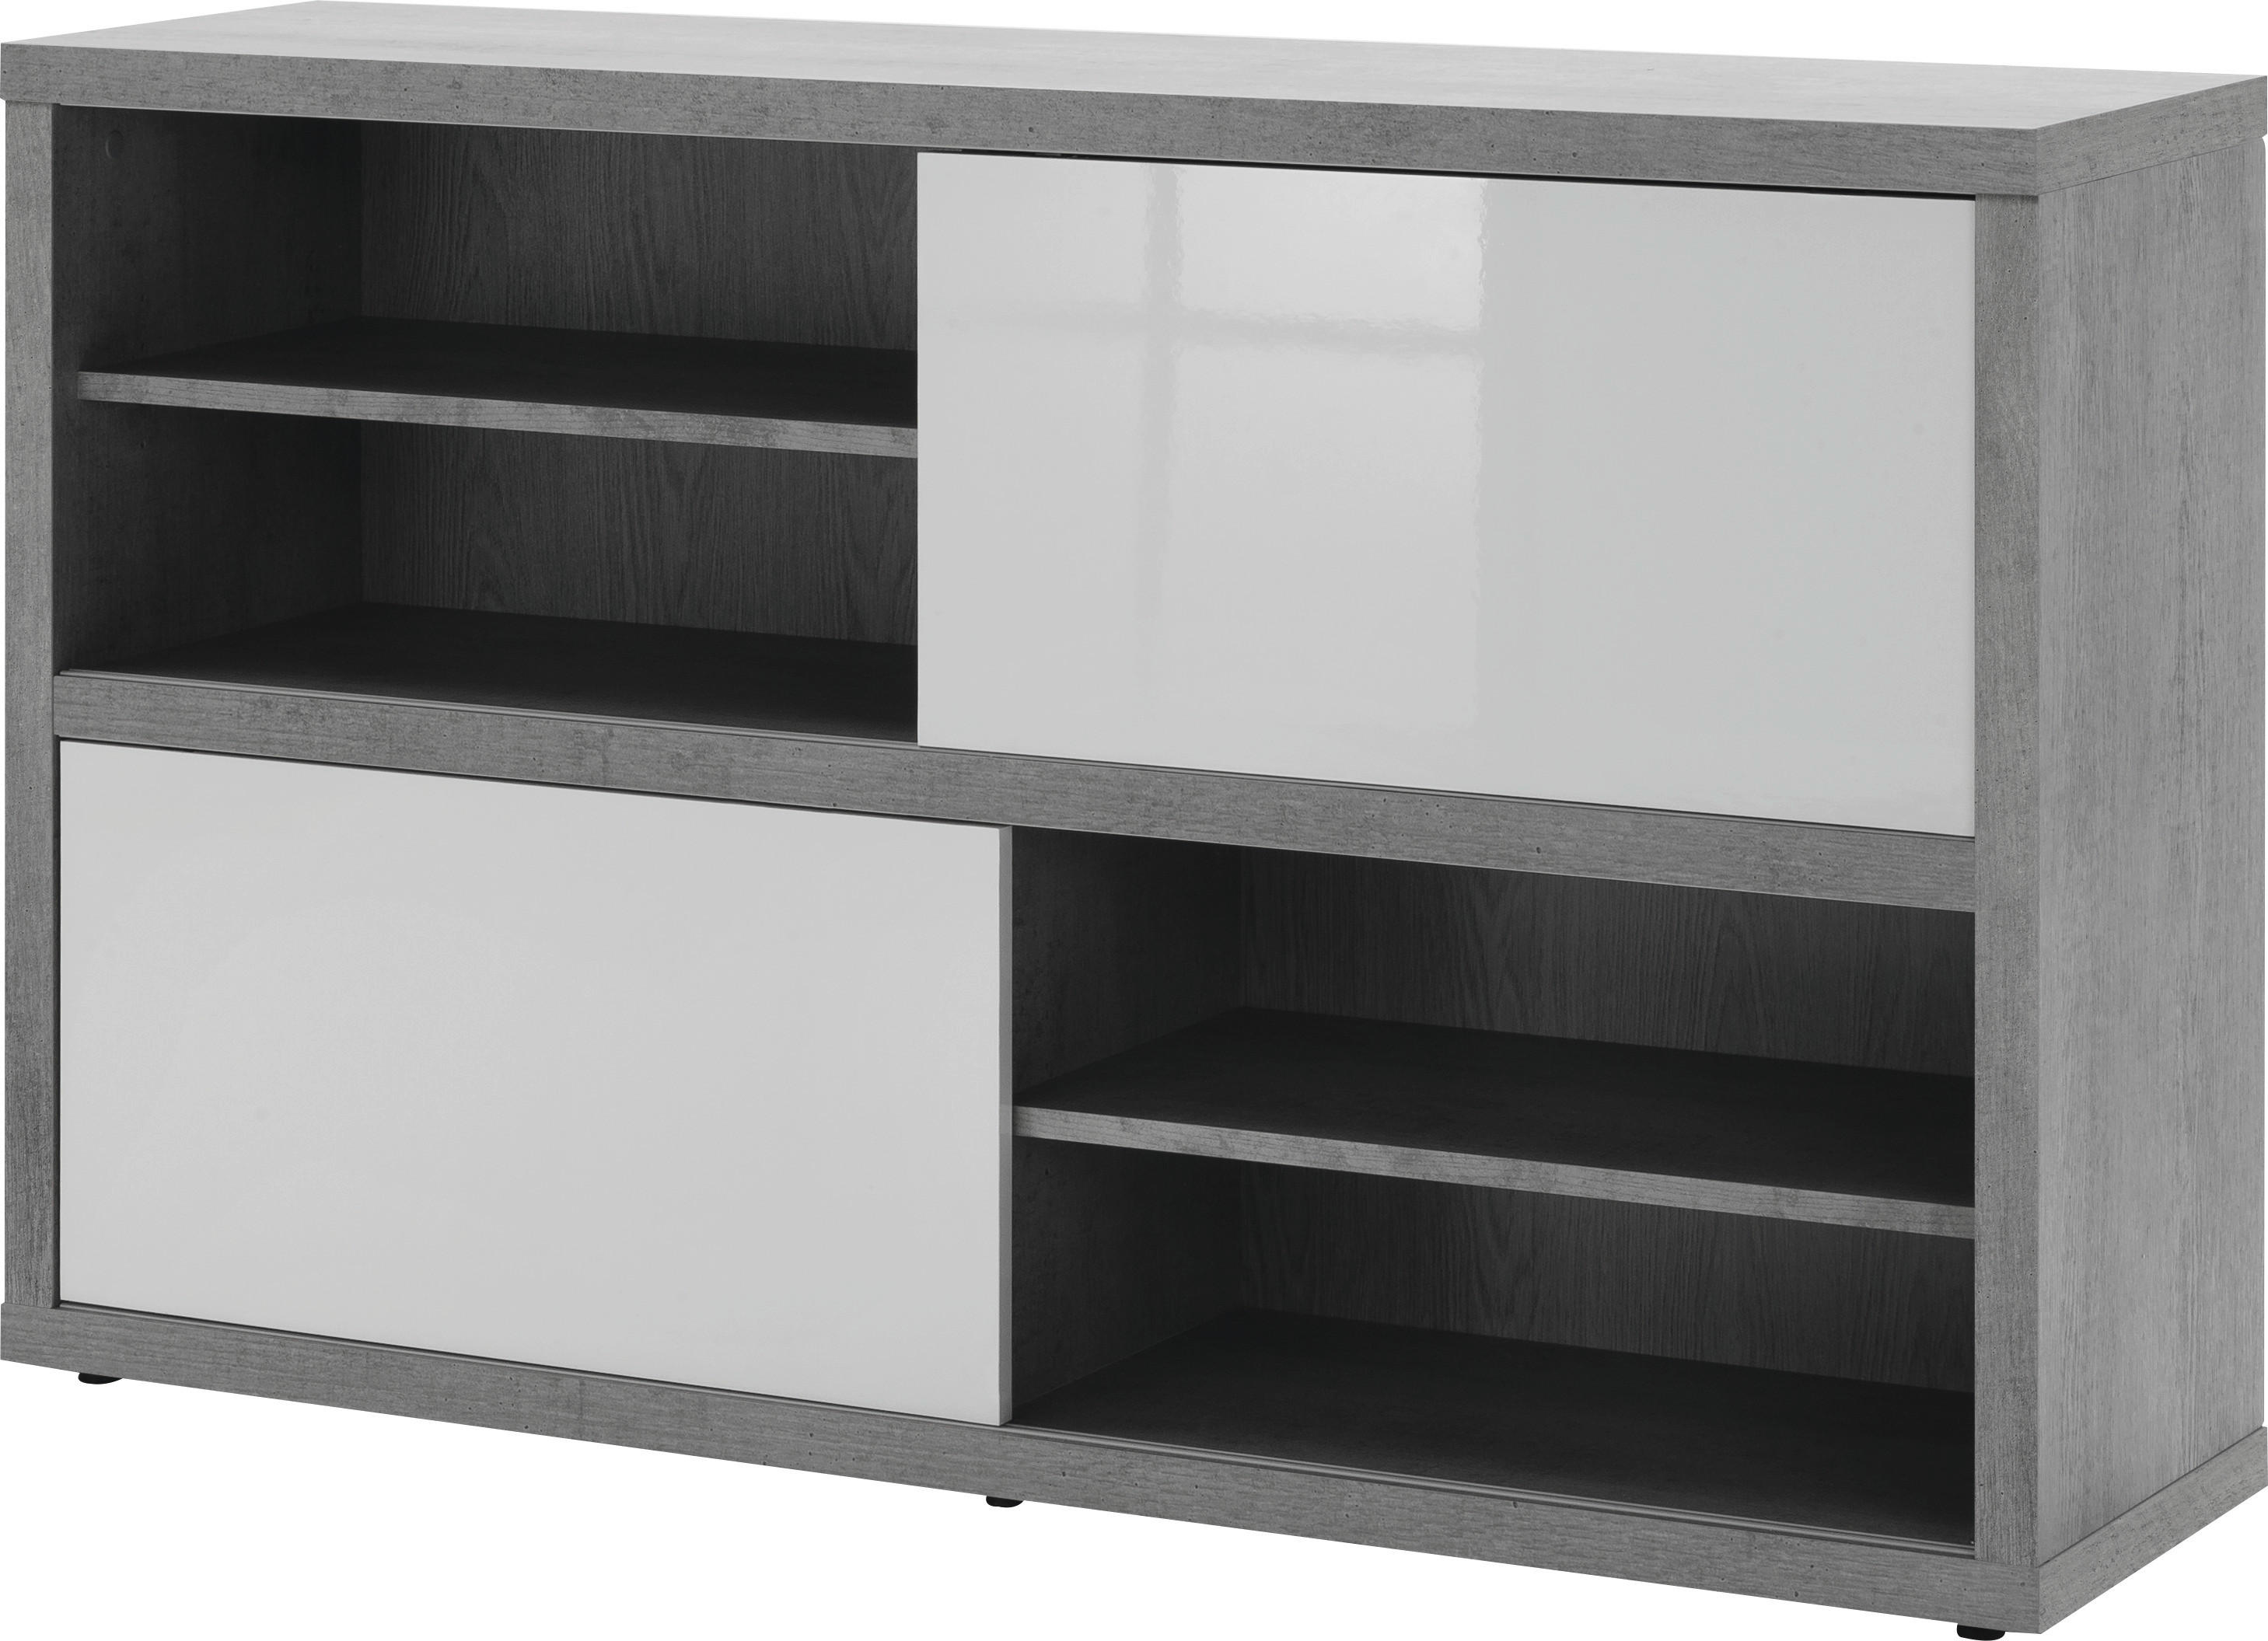 REGÁL, šedá, vysoce lesklá bílá, 140/87/35,6 cm - šedá/vysoce lesklá bílá, Design, kompozitní dřevo (140/87/35,6cm) - Carryhome